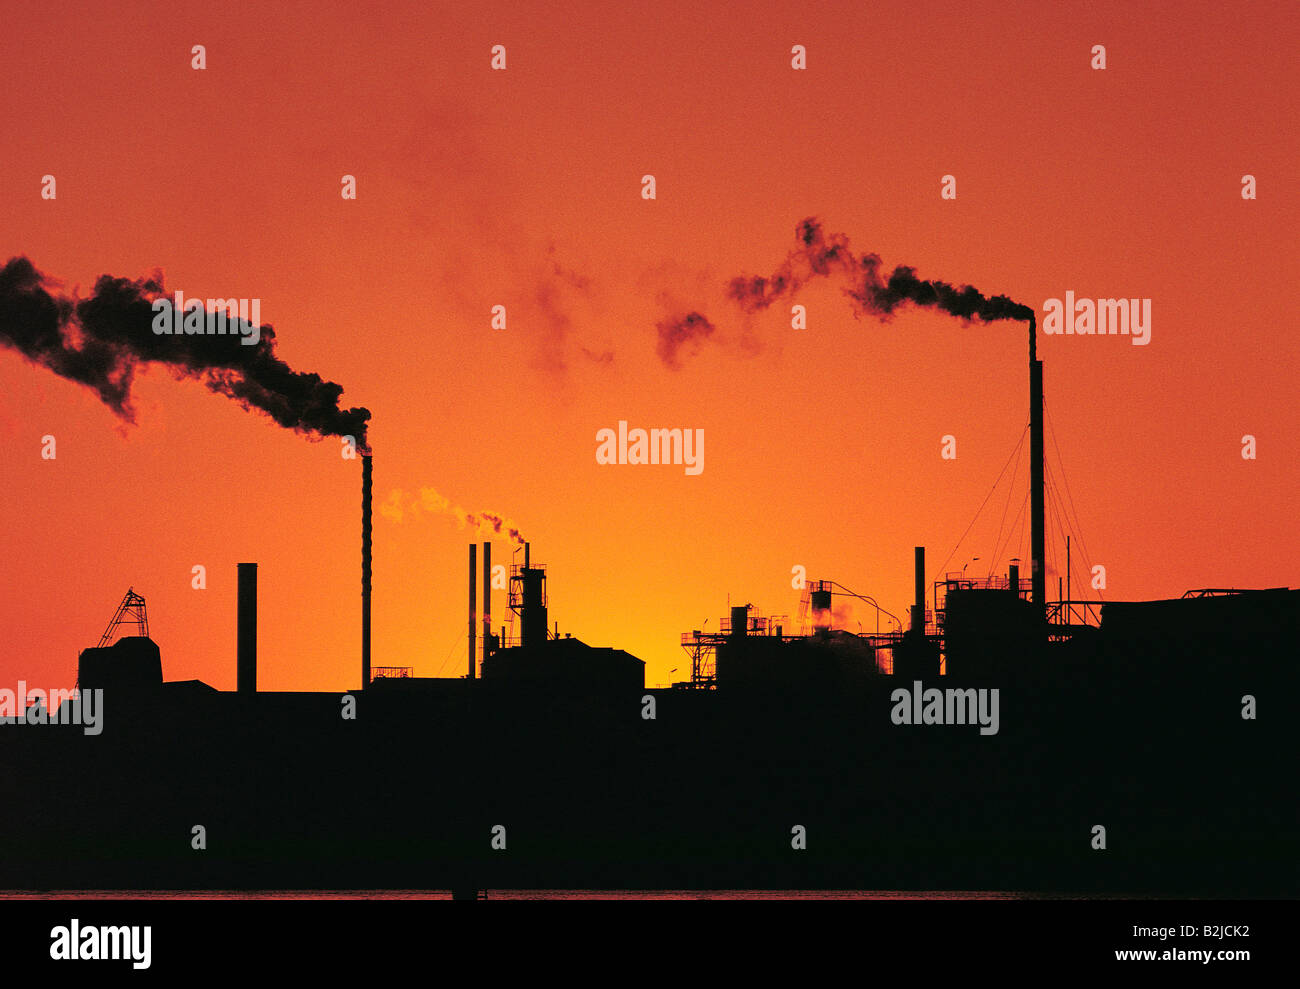 Australia. Industrial skyline. Refinery with smoking chimneys at sunset. Stock Photo